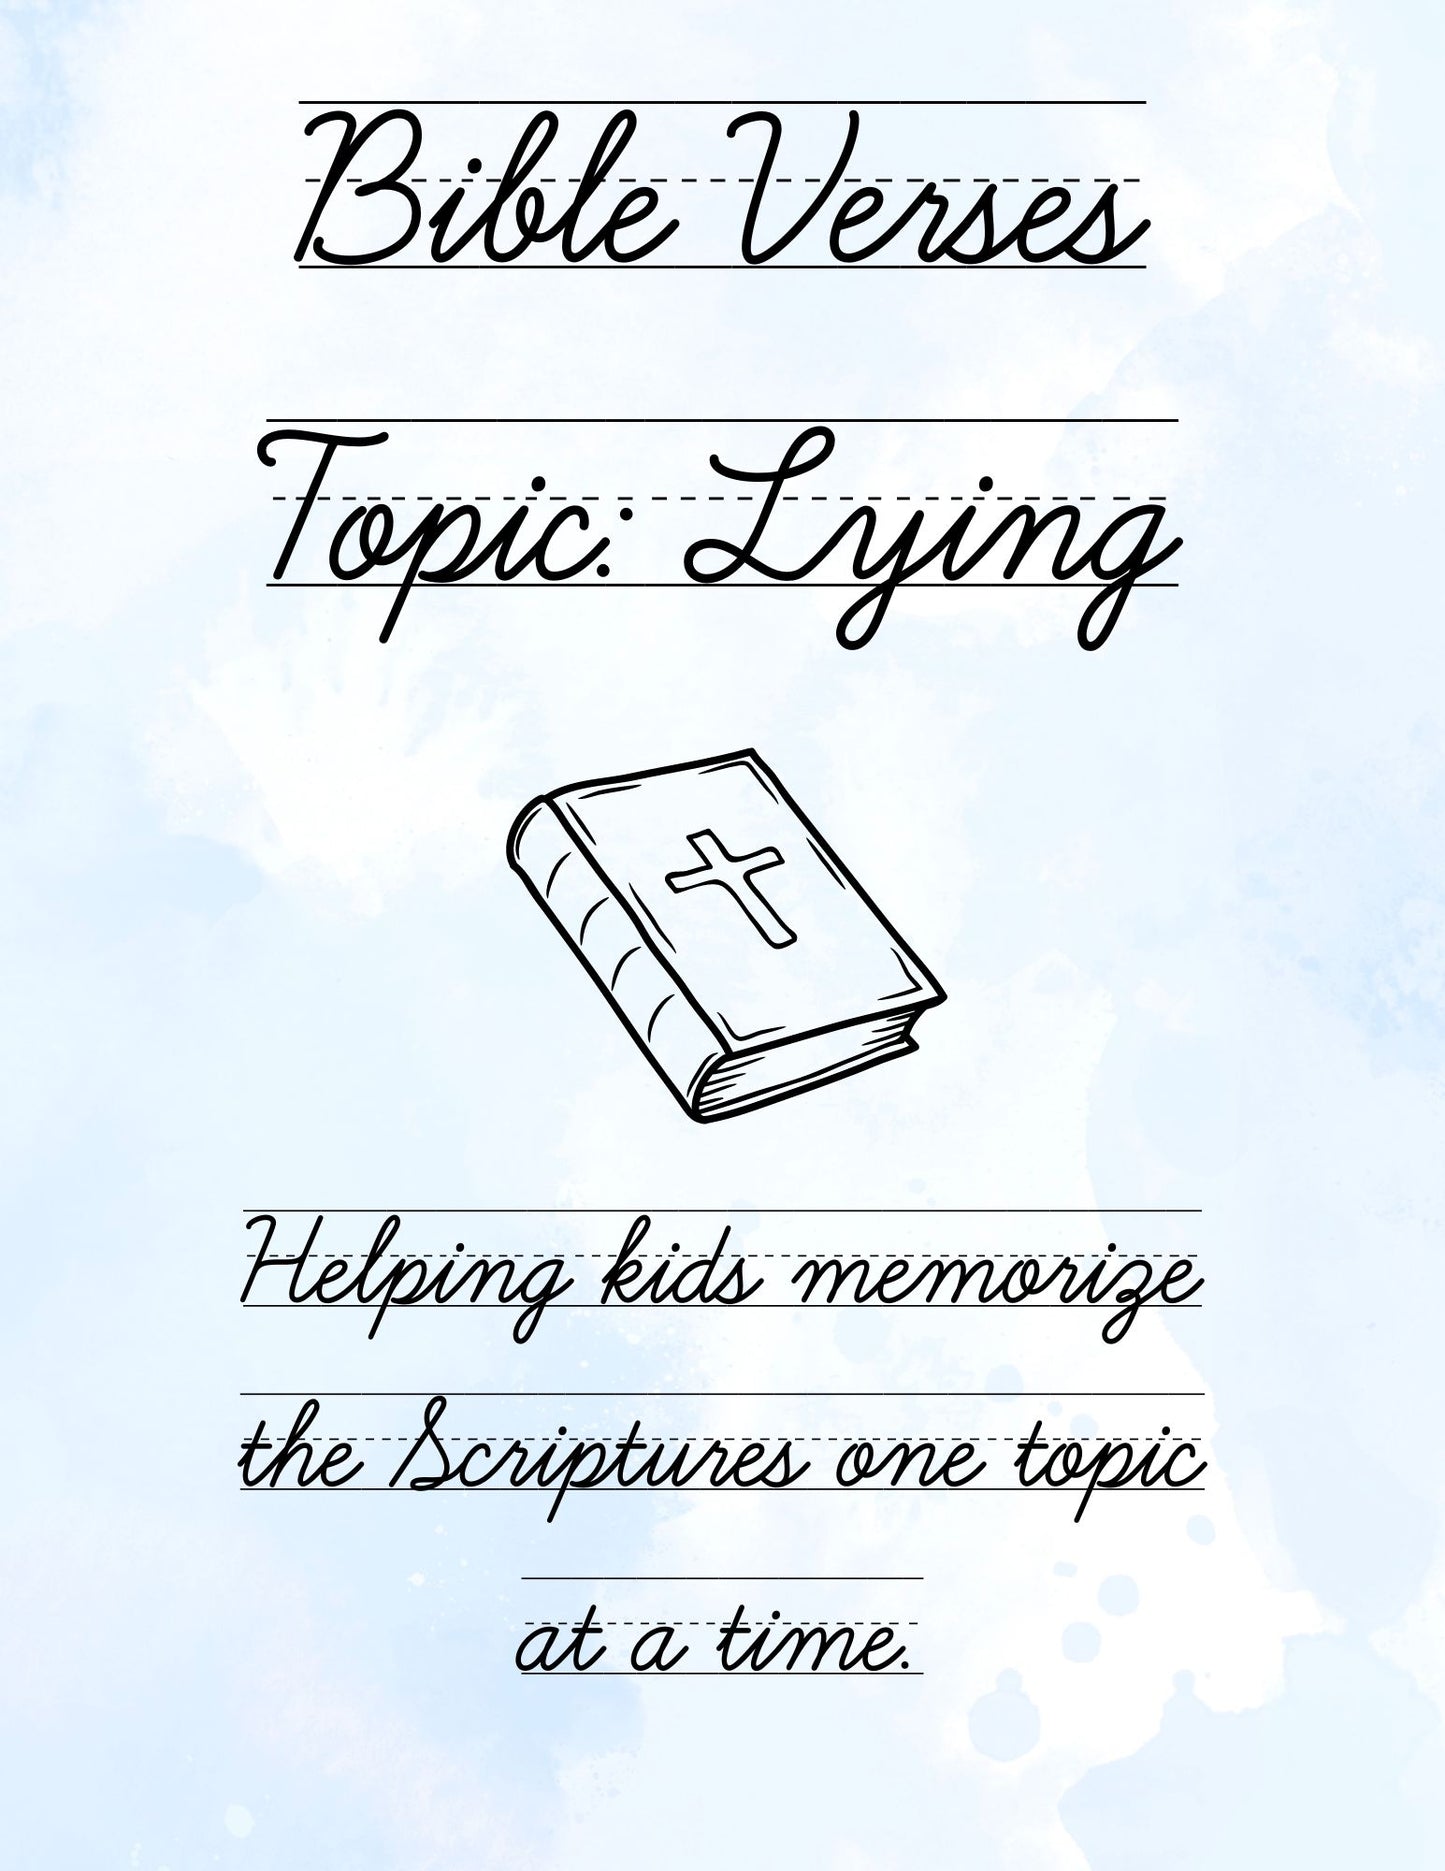 Writing Bible Verse Topics: Lying